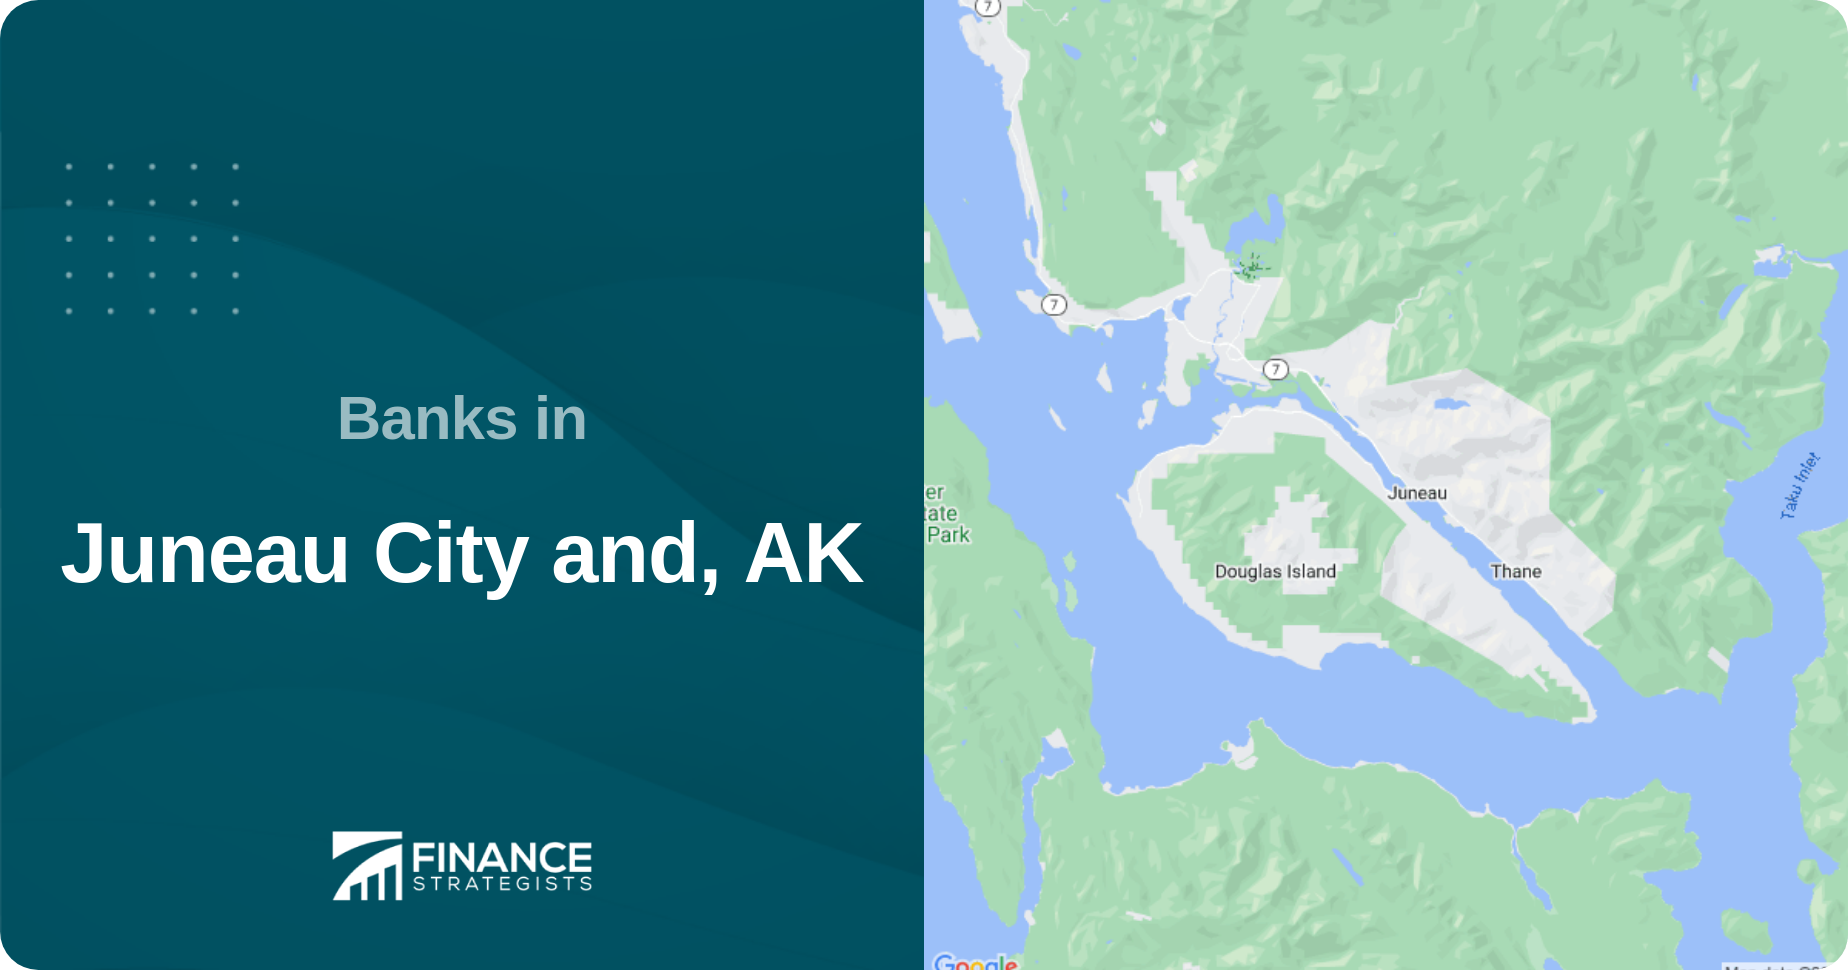 Banks in Juneau City and Borough, AK